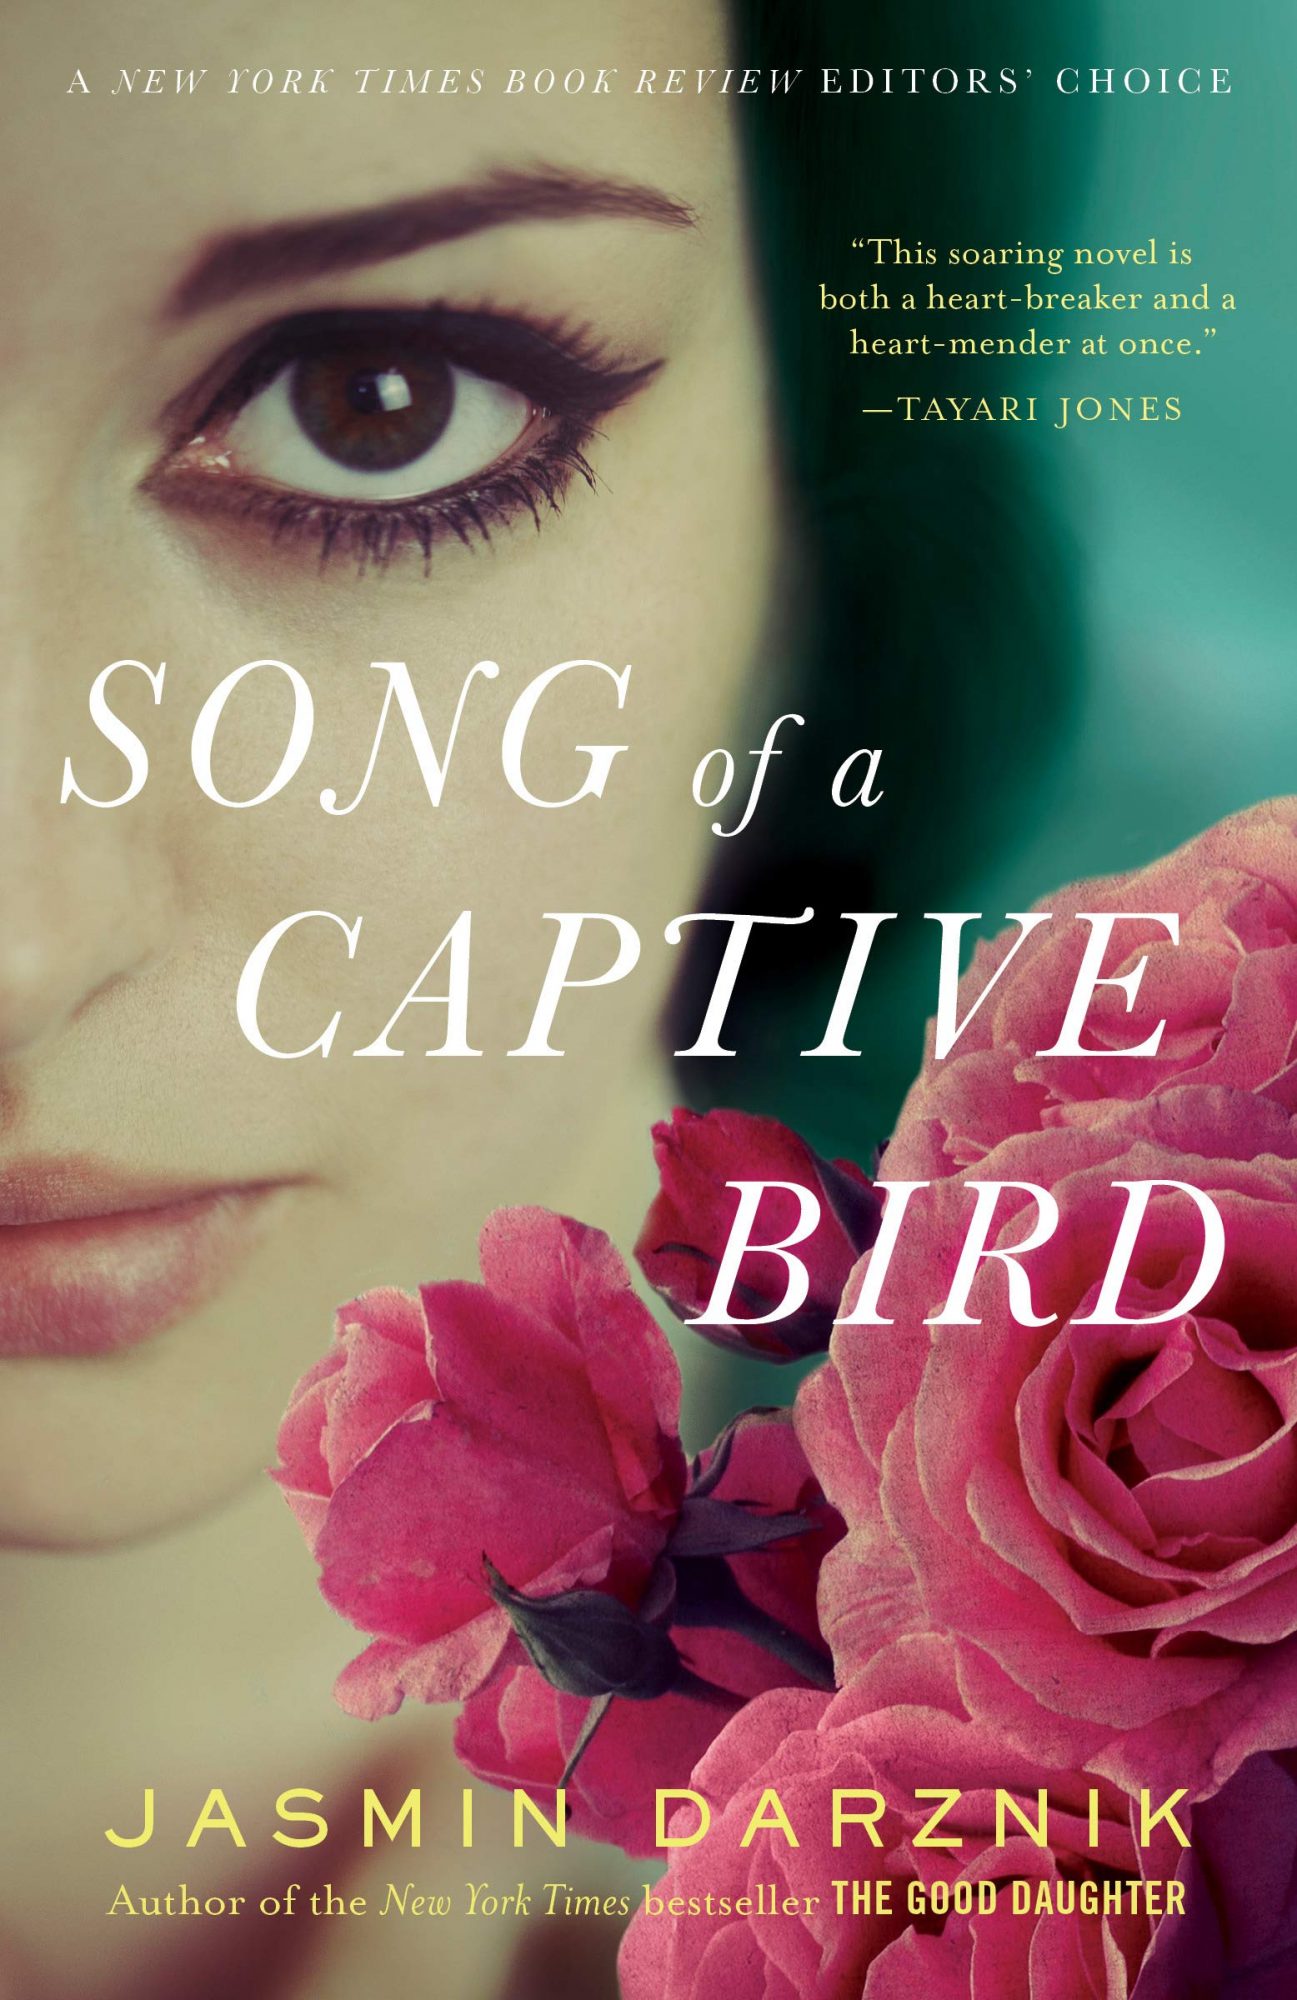 song-of-captive-bird-book.jpg